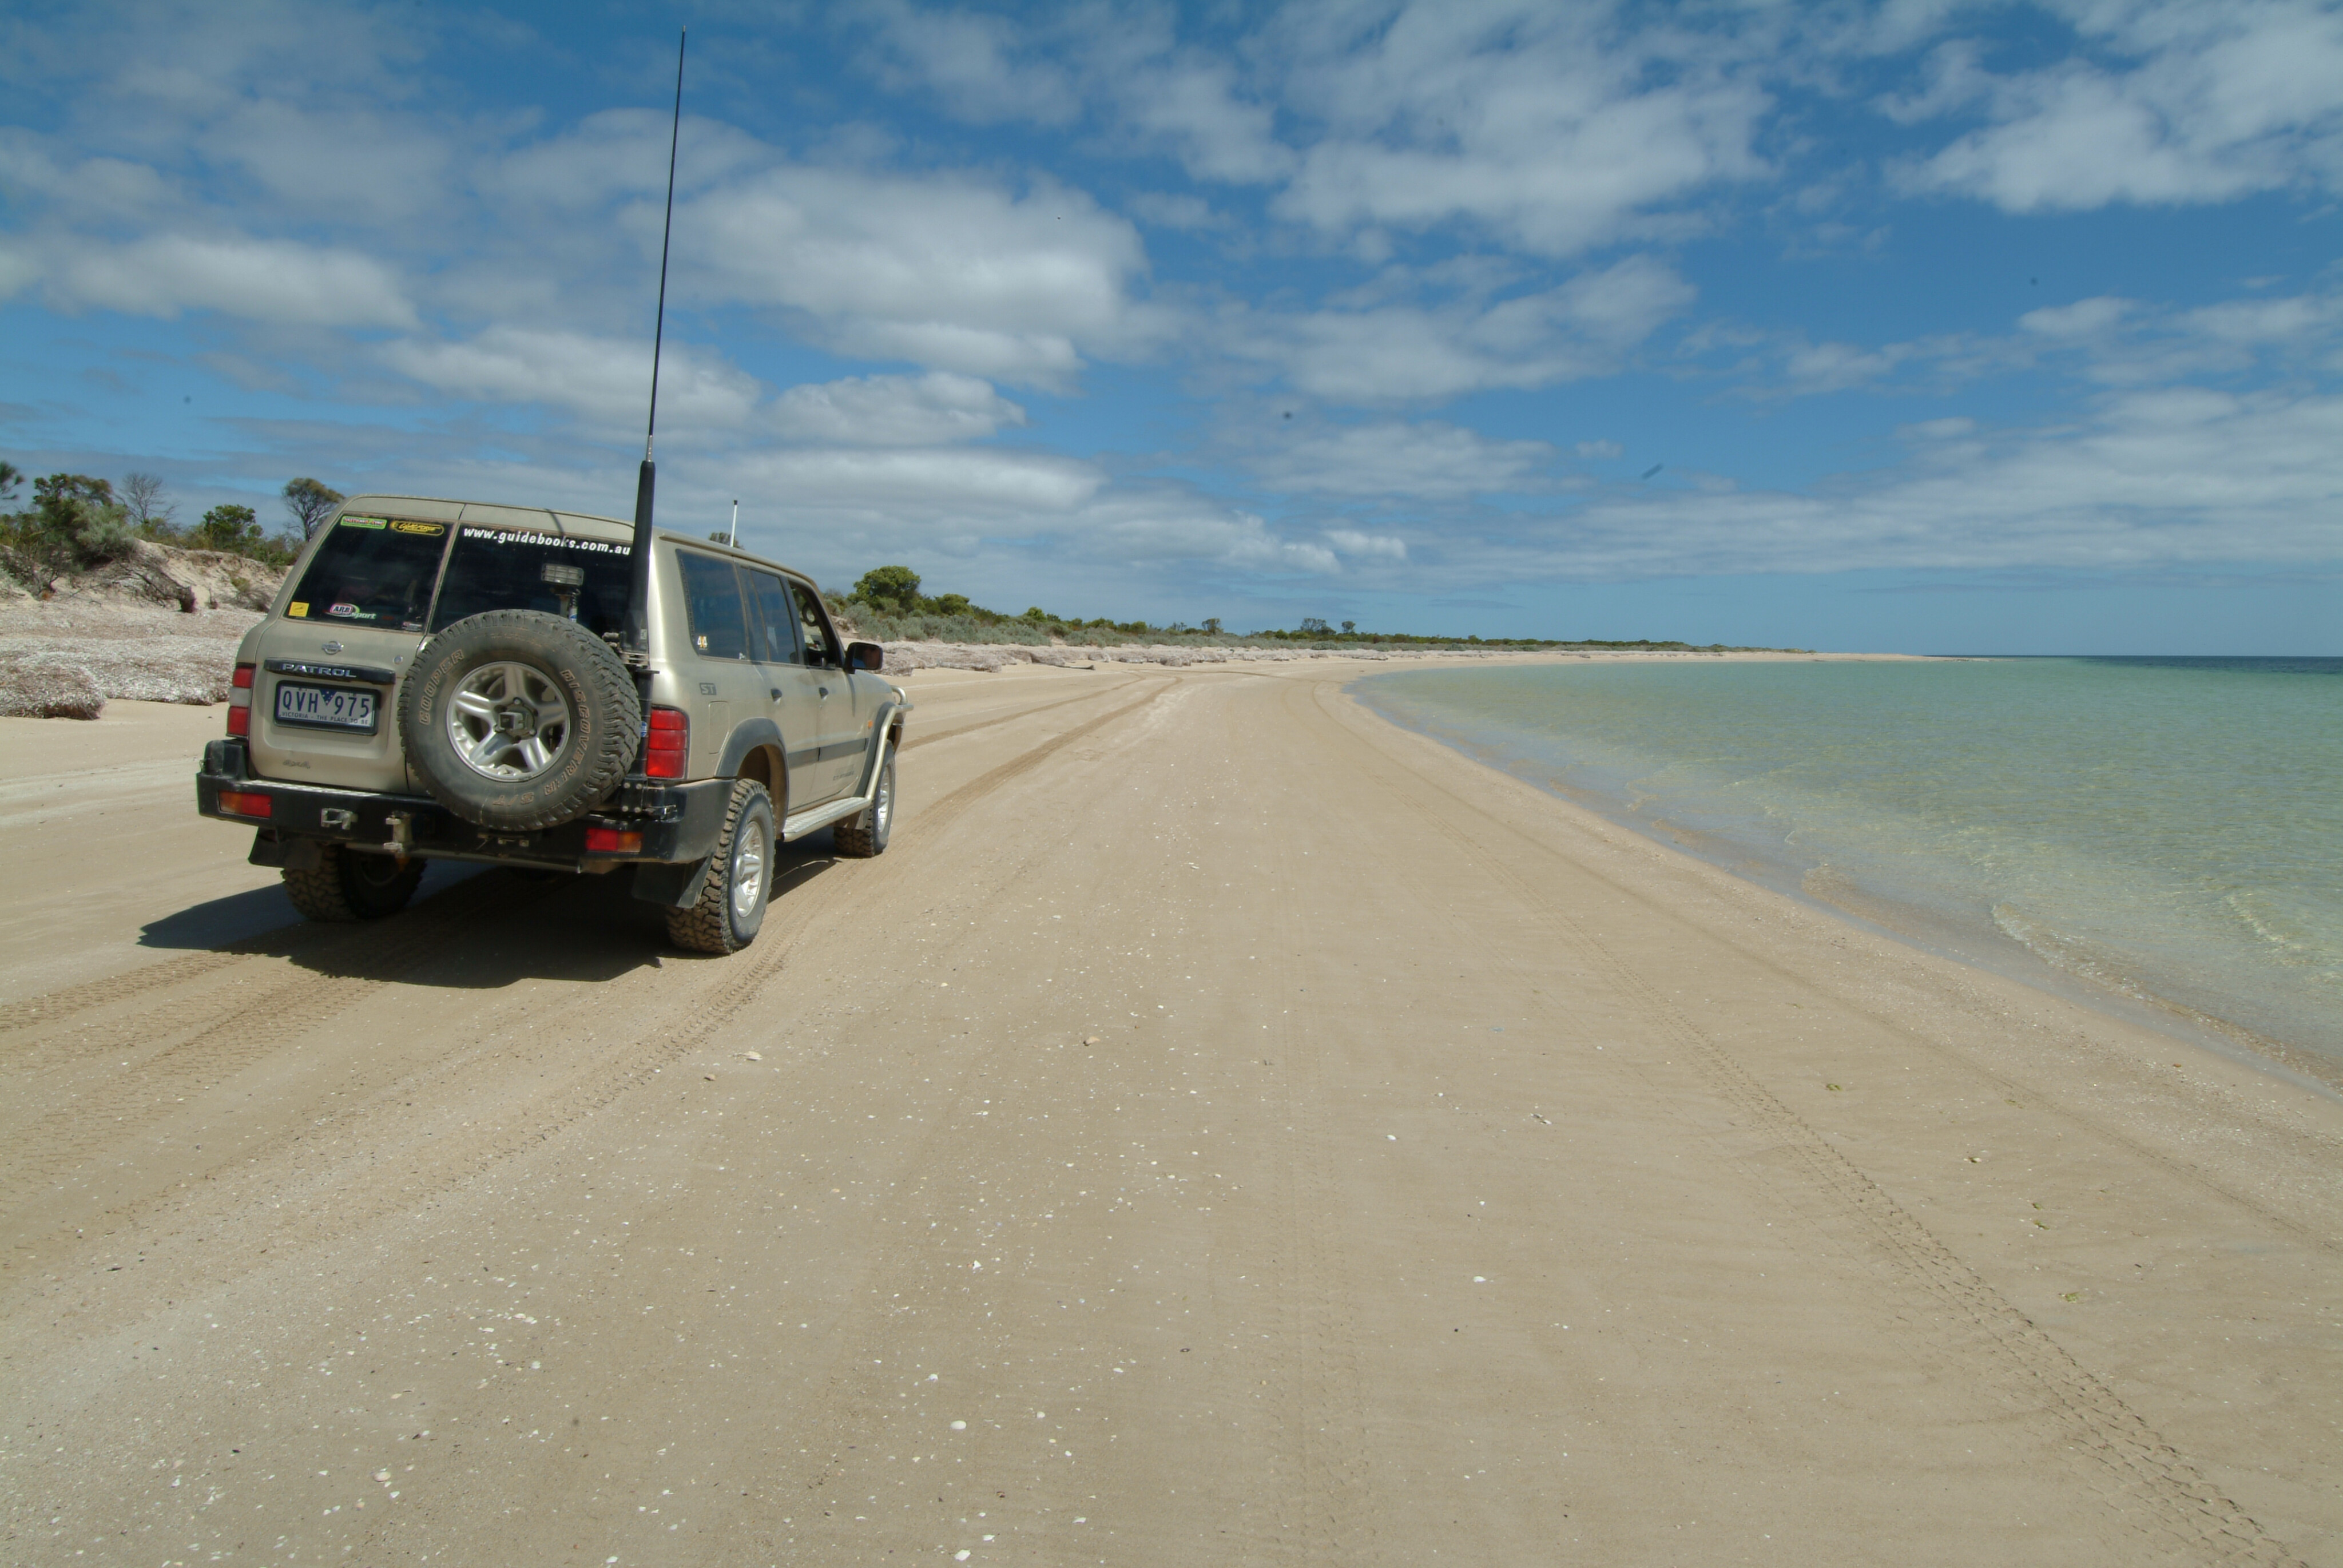 feb519e0/coffin bay beach track 4x4 australia explore sa JPG